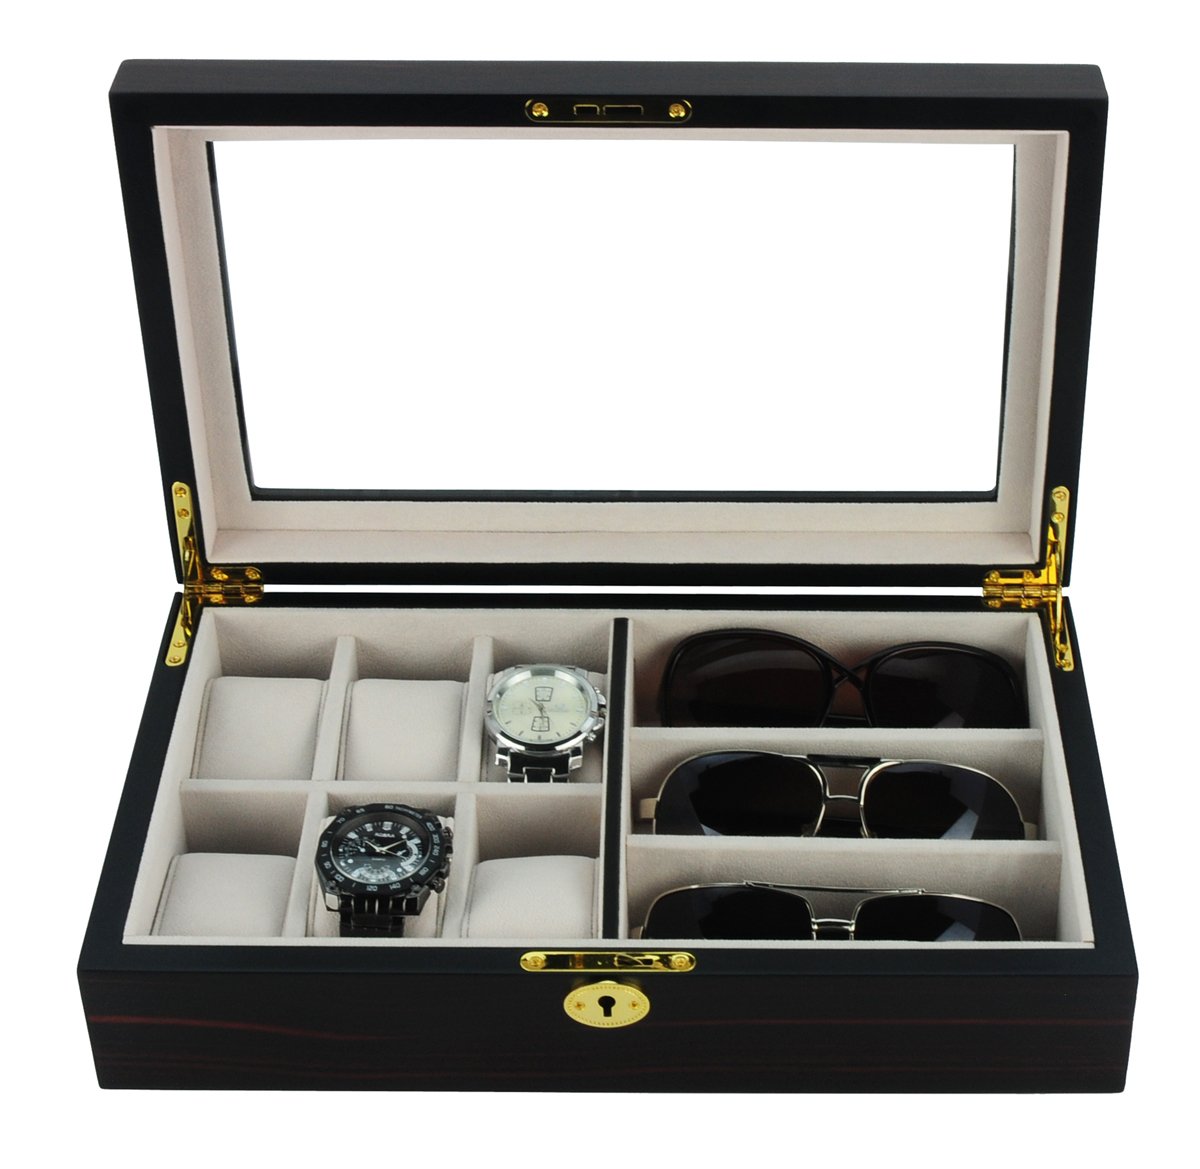 TimelyBuys 6 Piece Watch Case and 3 Piece Eyeglasses Storage Ebony Wood Combo Jewelry Box Sunglass Glasses Display Organizer with Glass Top Father's Day